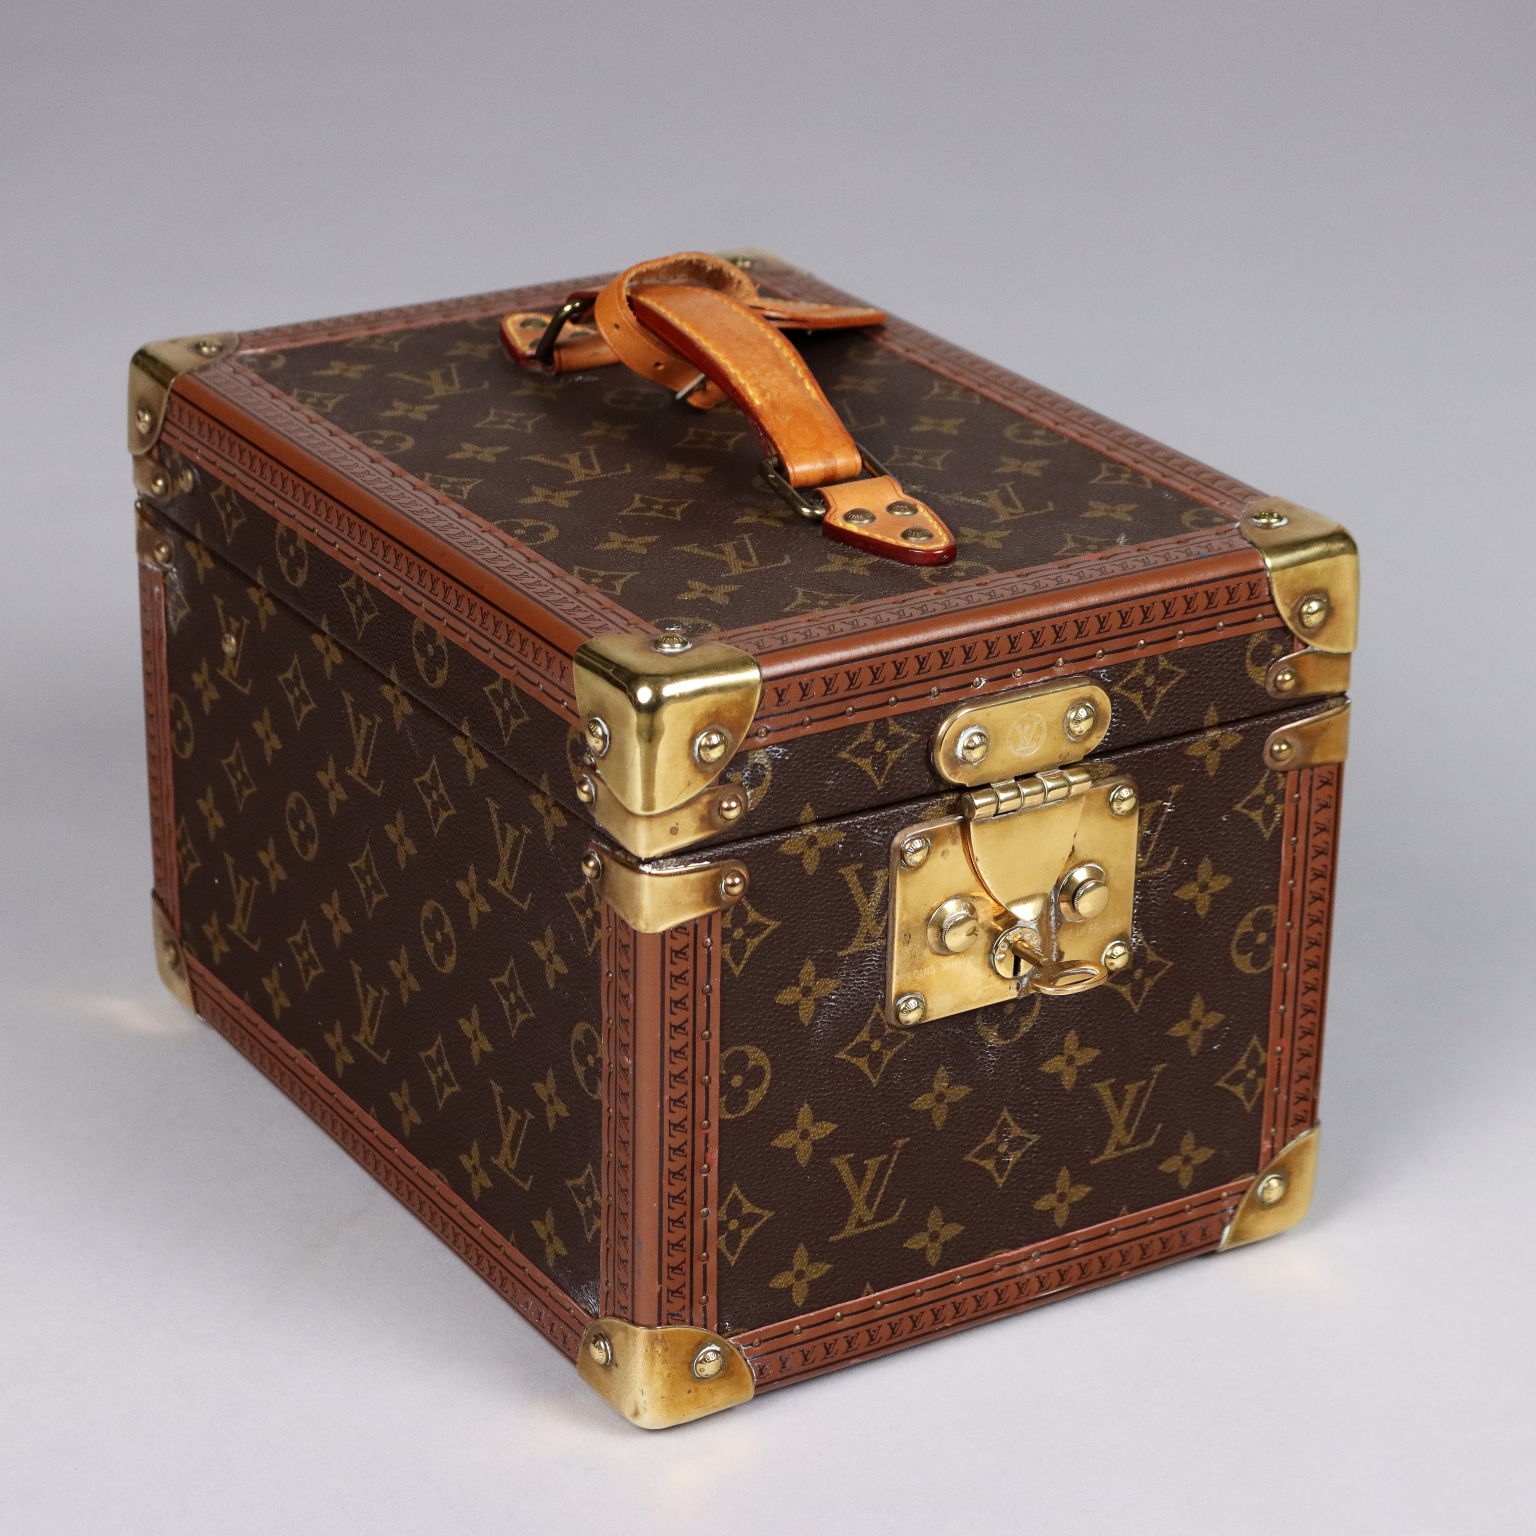 Antique Louis Vuitton trunks become storytellers of modern human